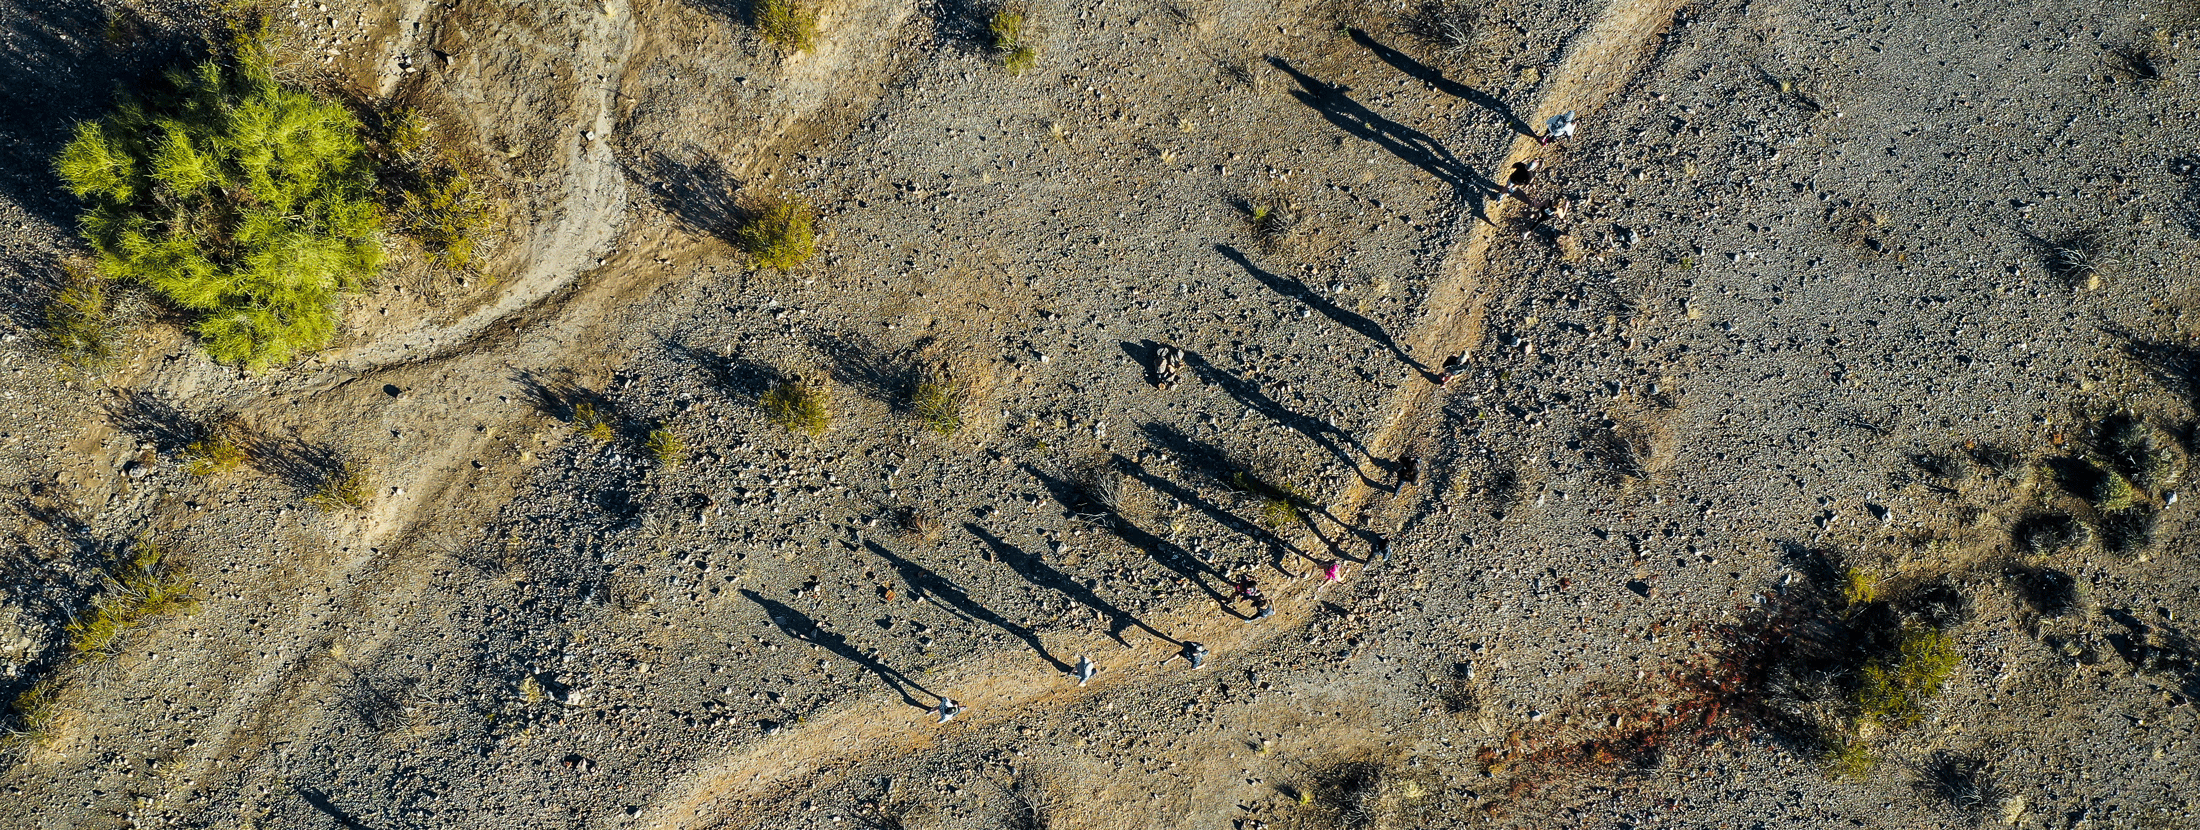 Arizona-Running-Trail-From-Drone